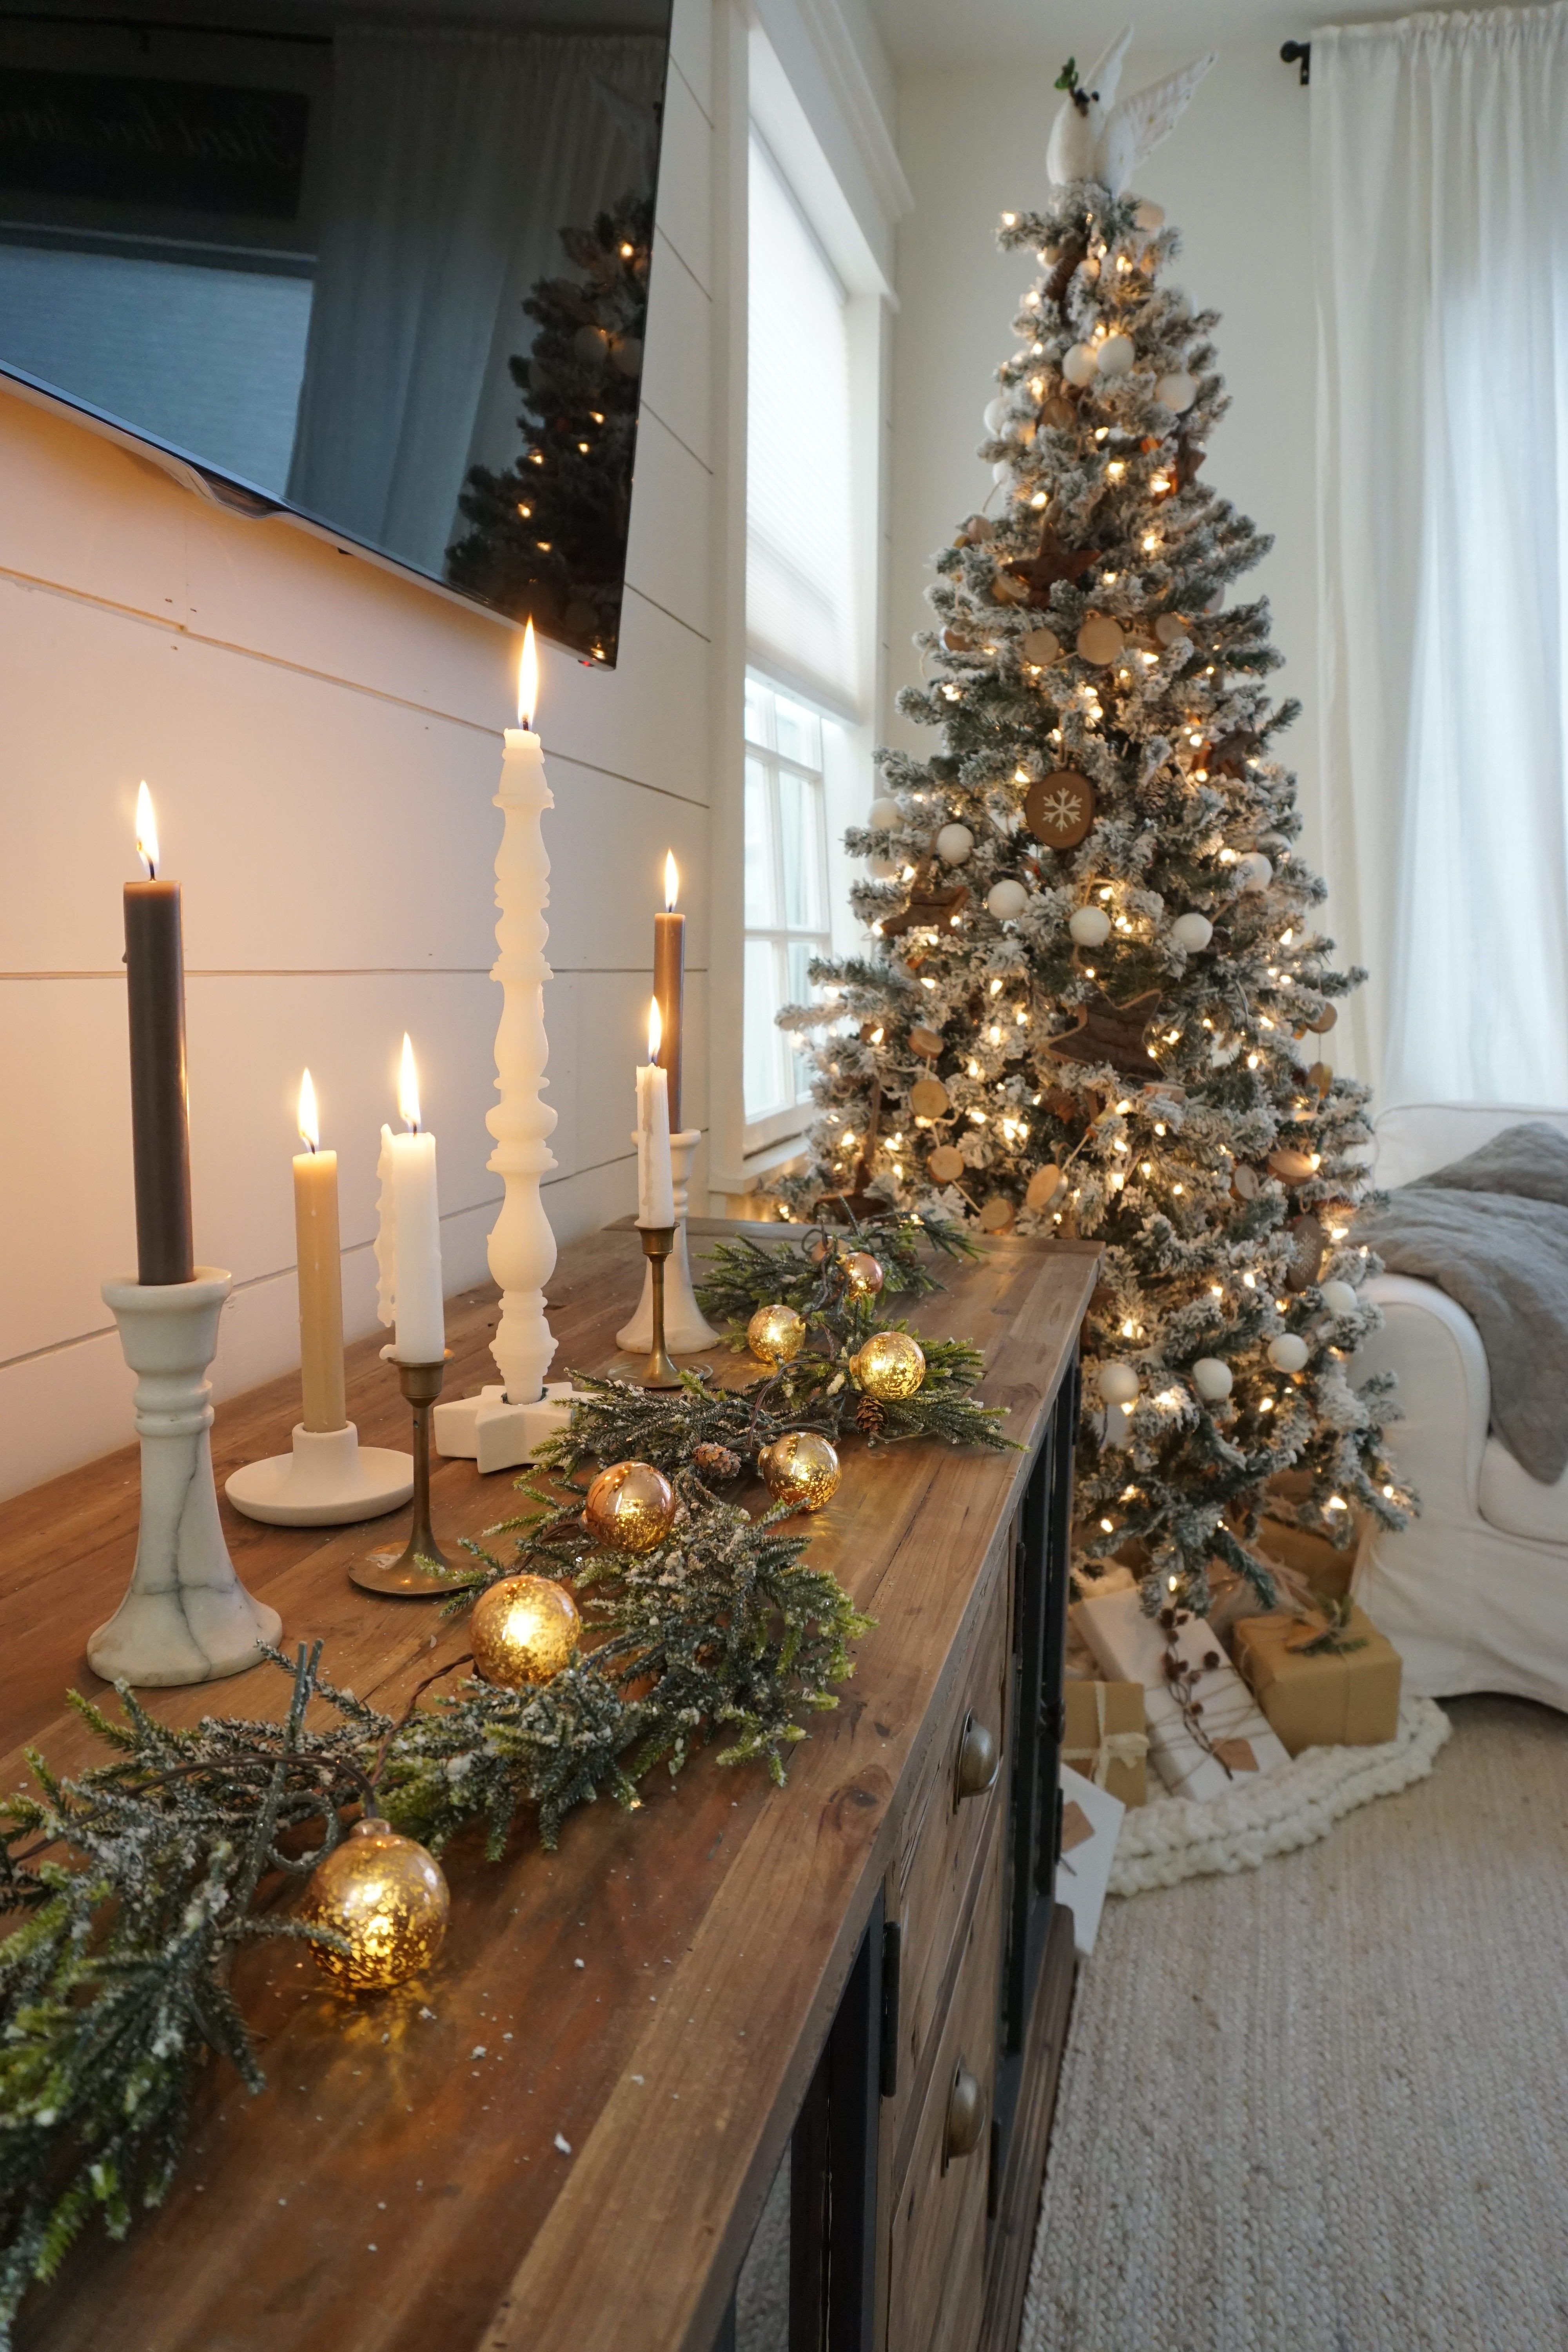 Christmas Light for Bedroom Fresh White Christmas Trees Decorated